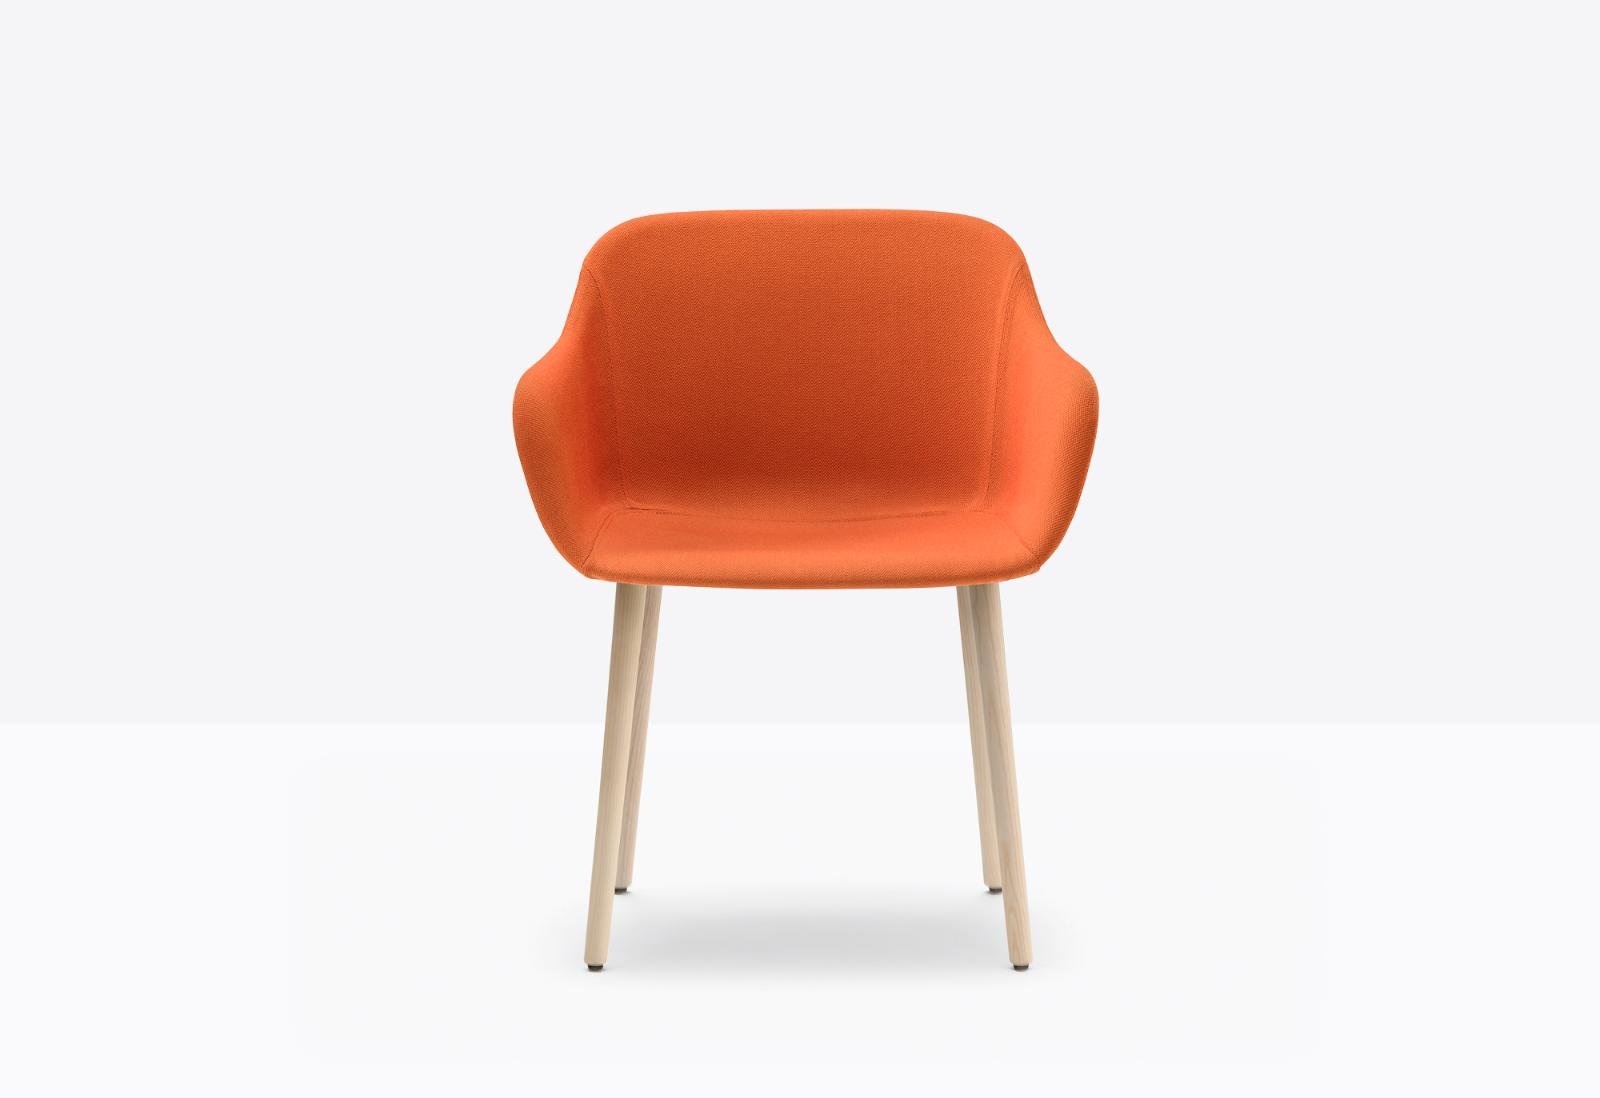 Babila XL 2752 chair from Pedrali, designed by Odoardo Fioravanti